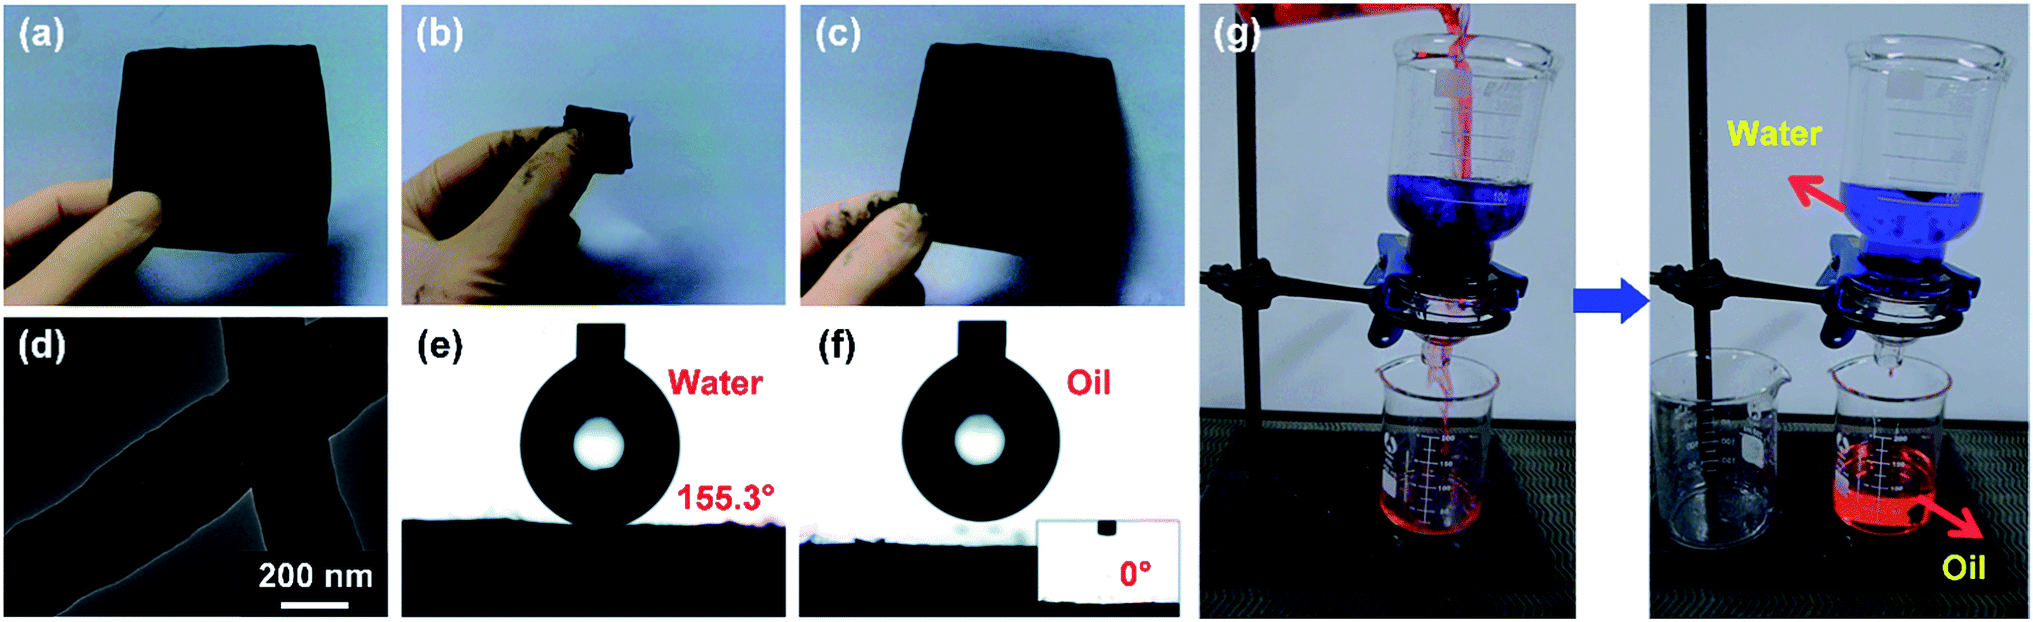 Electrospun flexible nanofibrous membranes for oil/water 